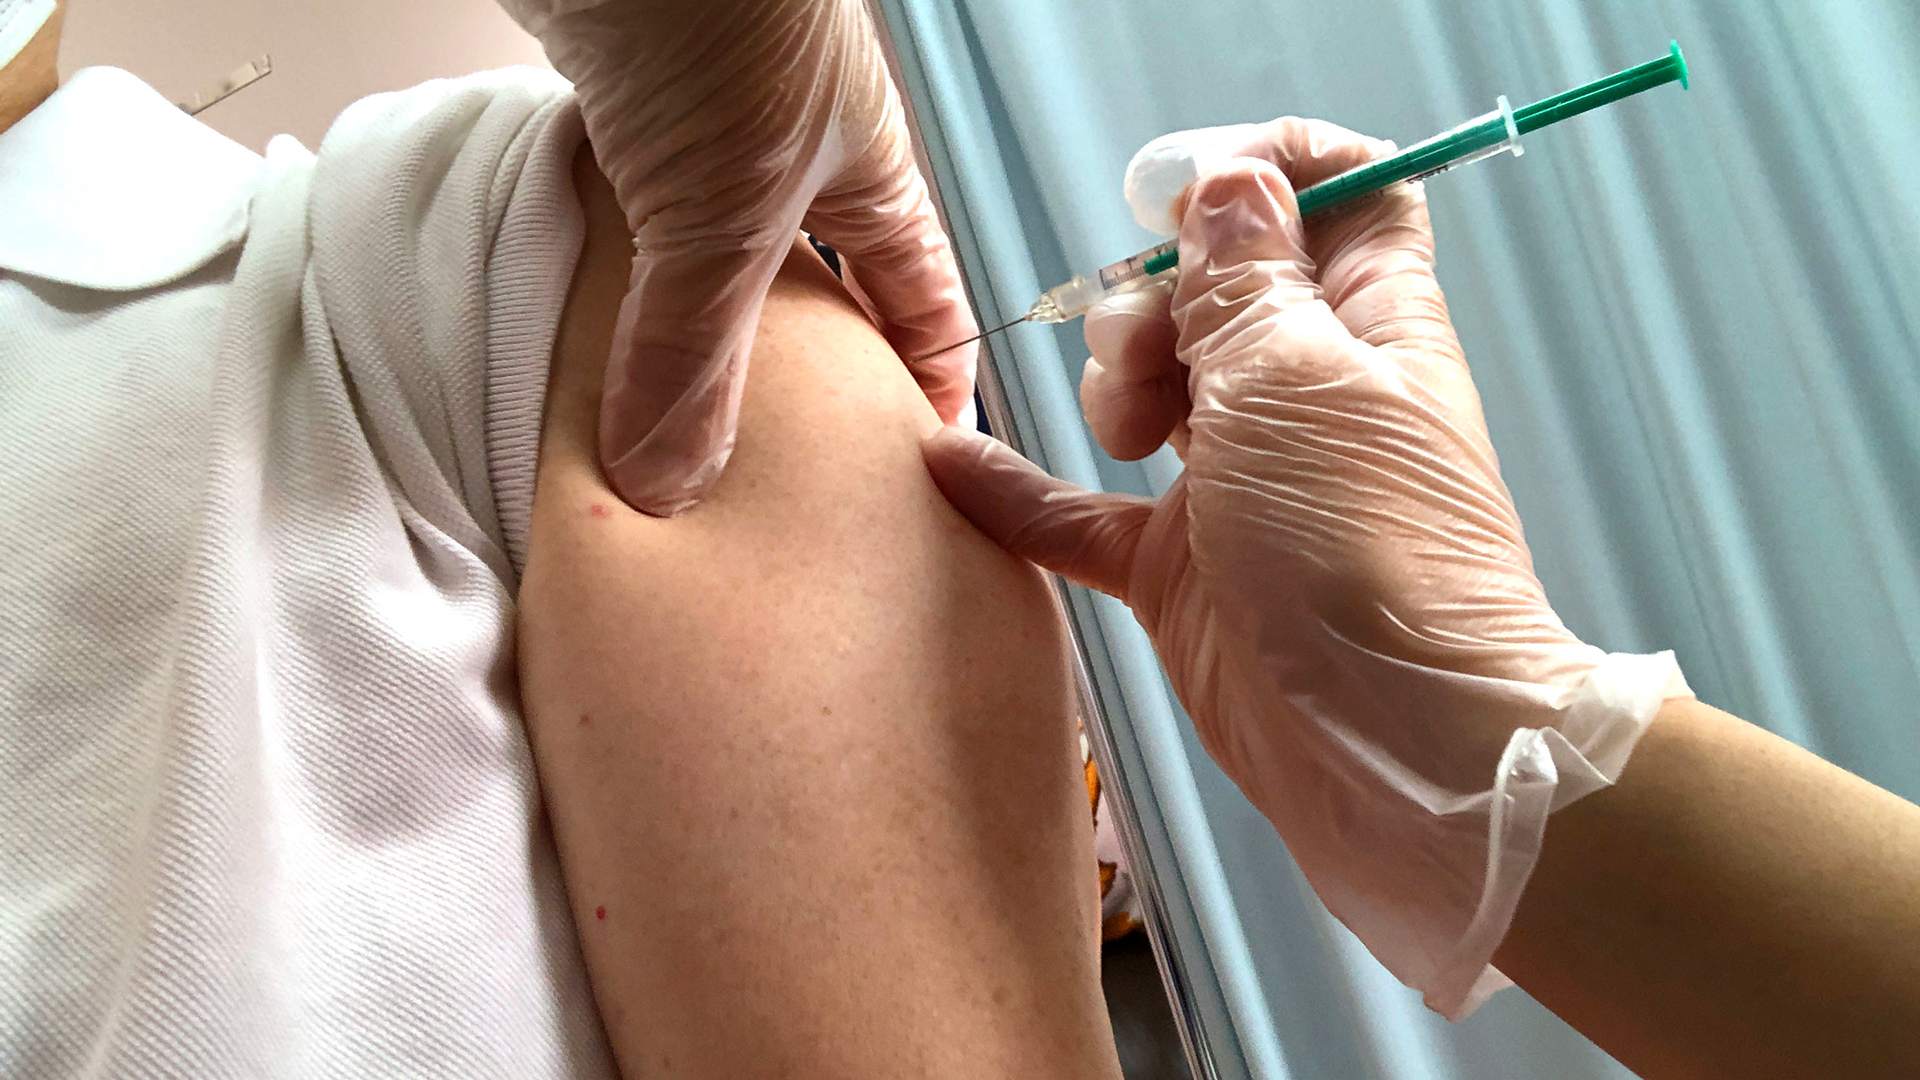 Covid-19-Impfung: Arm mit Spritze | picture alliance / SvenSimon